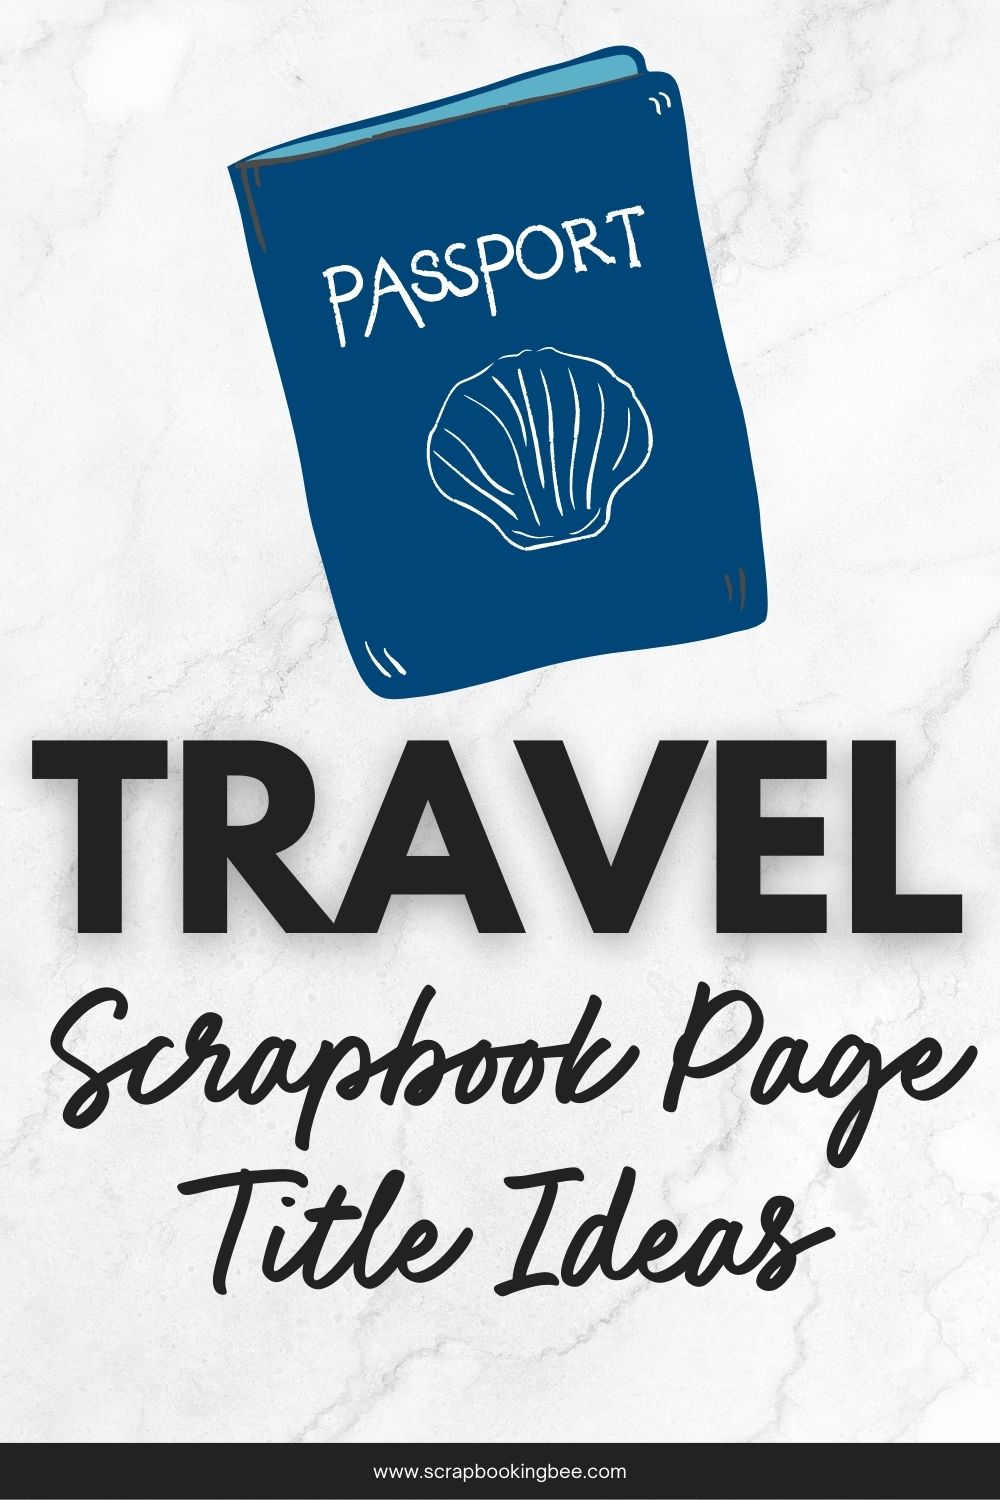 Big Picture Classes  Blog: Travel Scrapbooking